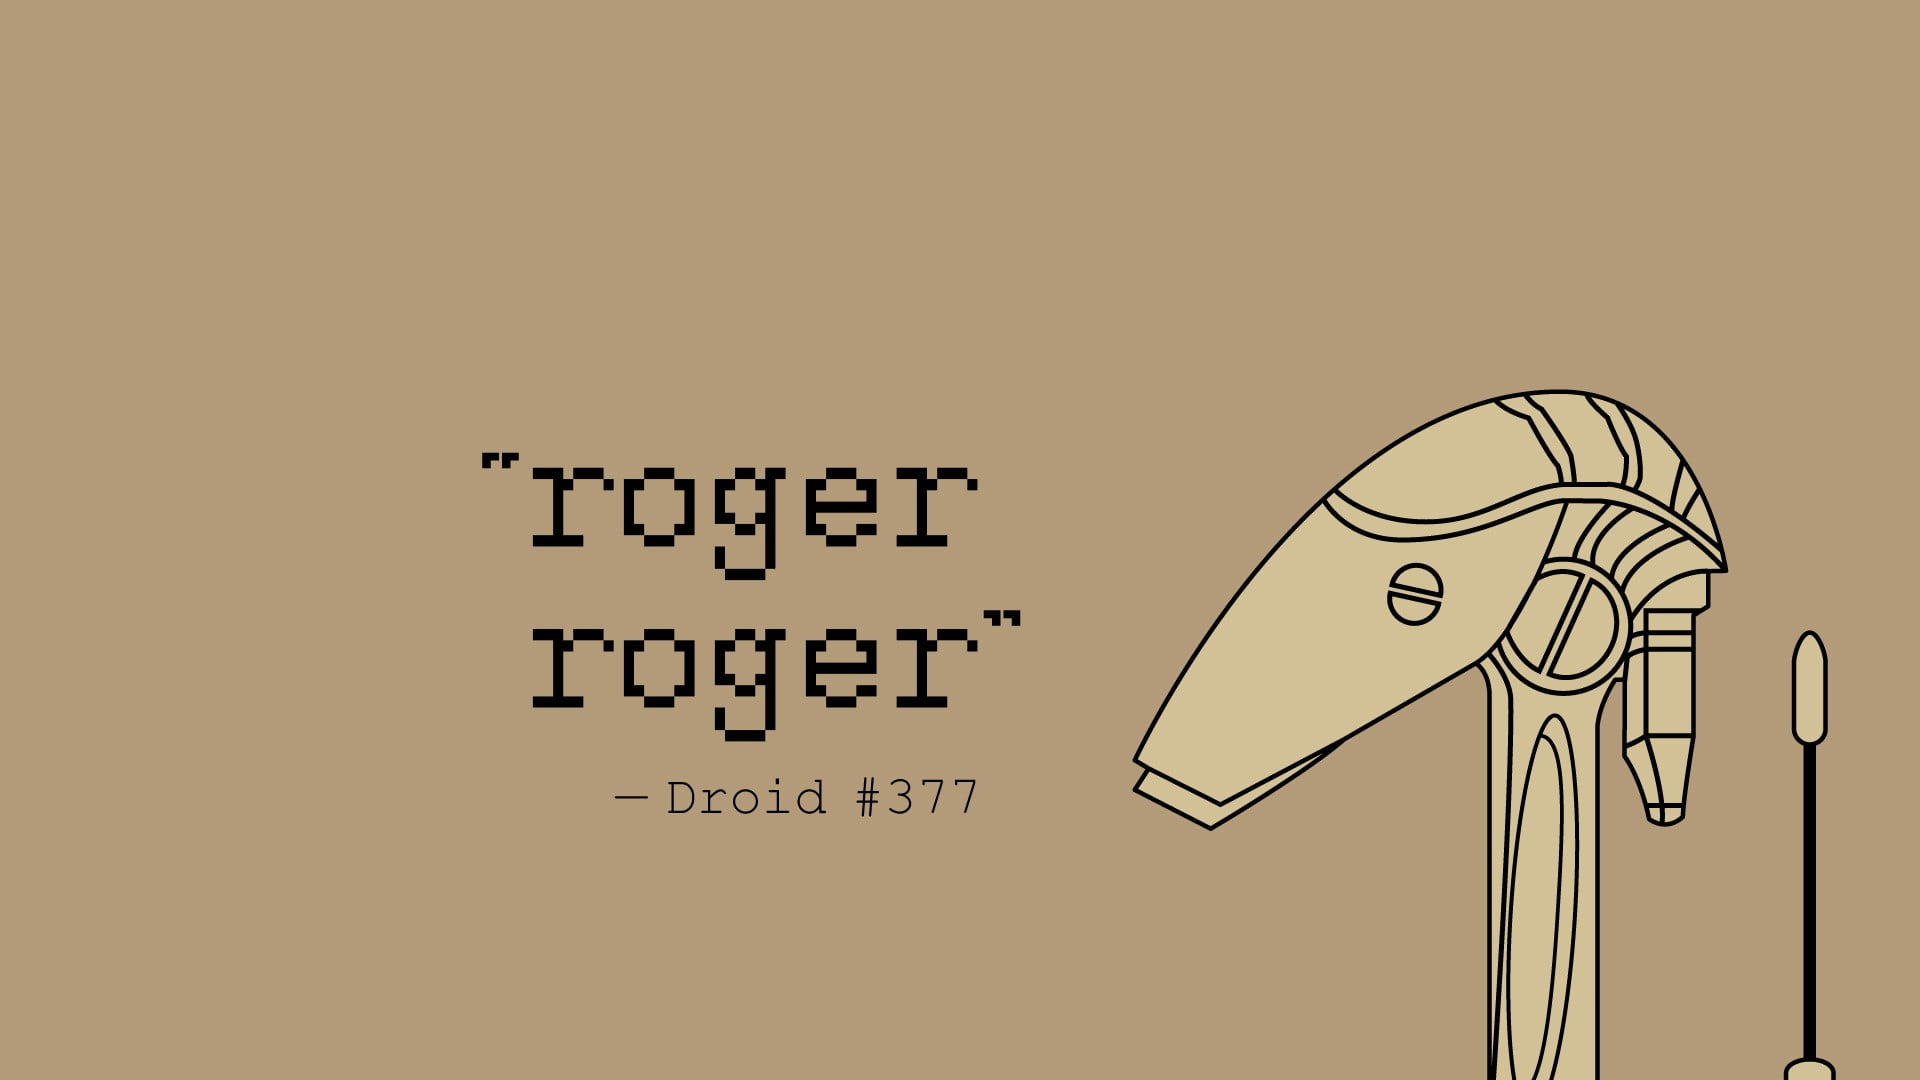 Roger rager